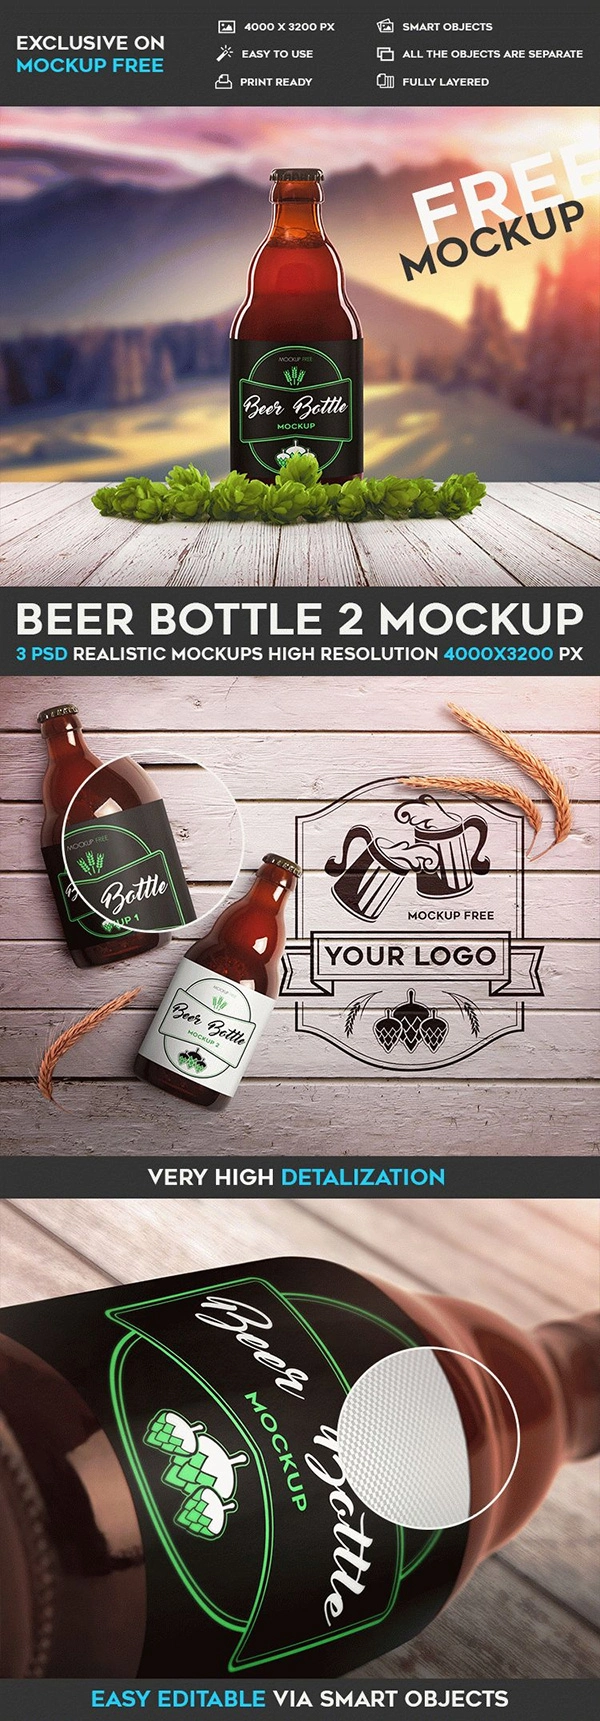 2 Beer Bottle Branding Mockup